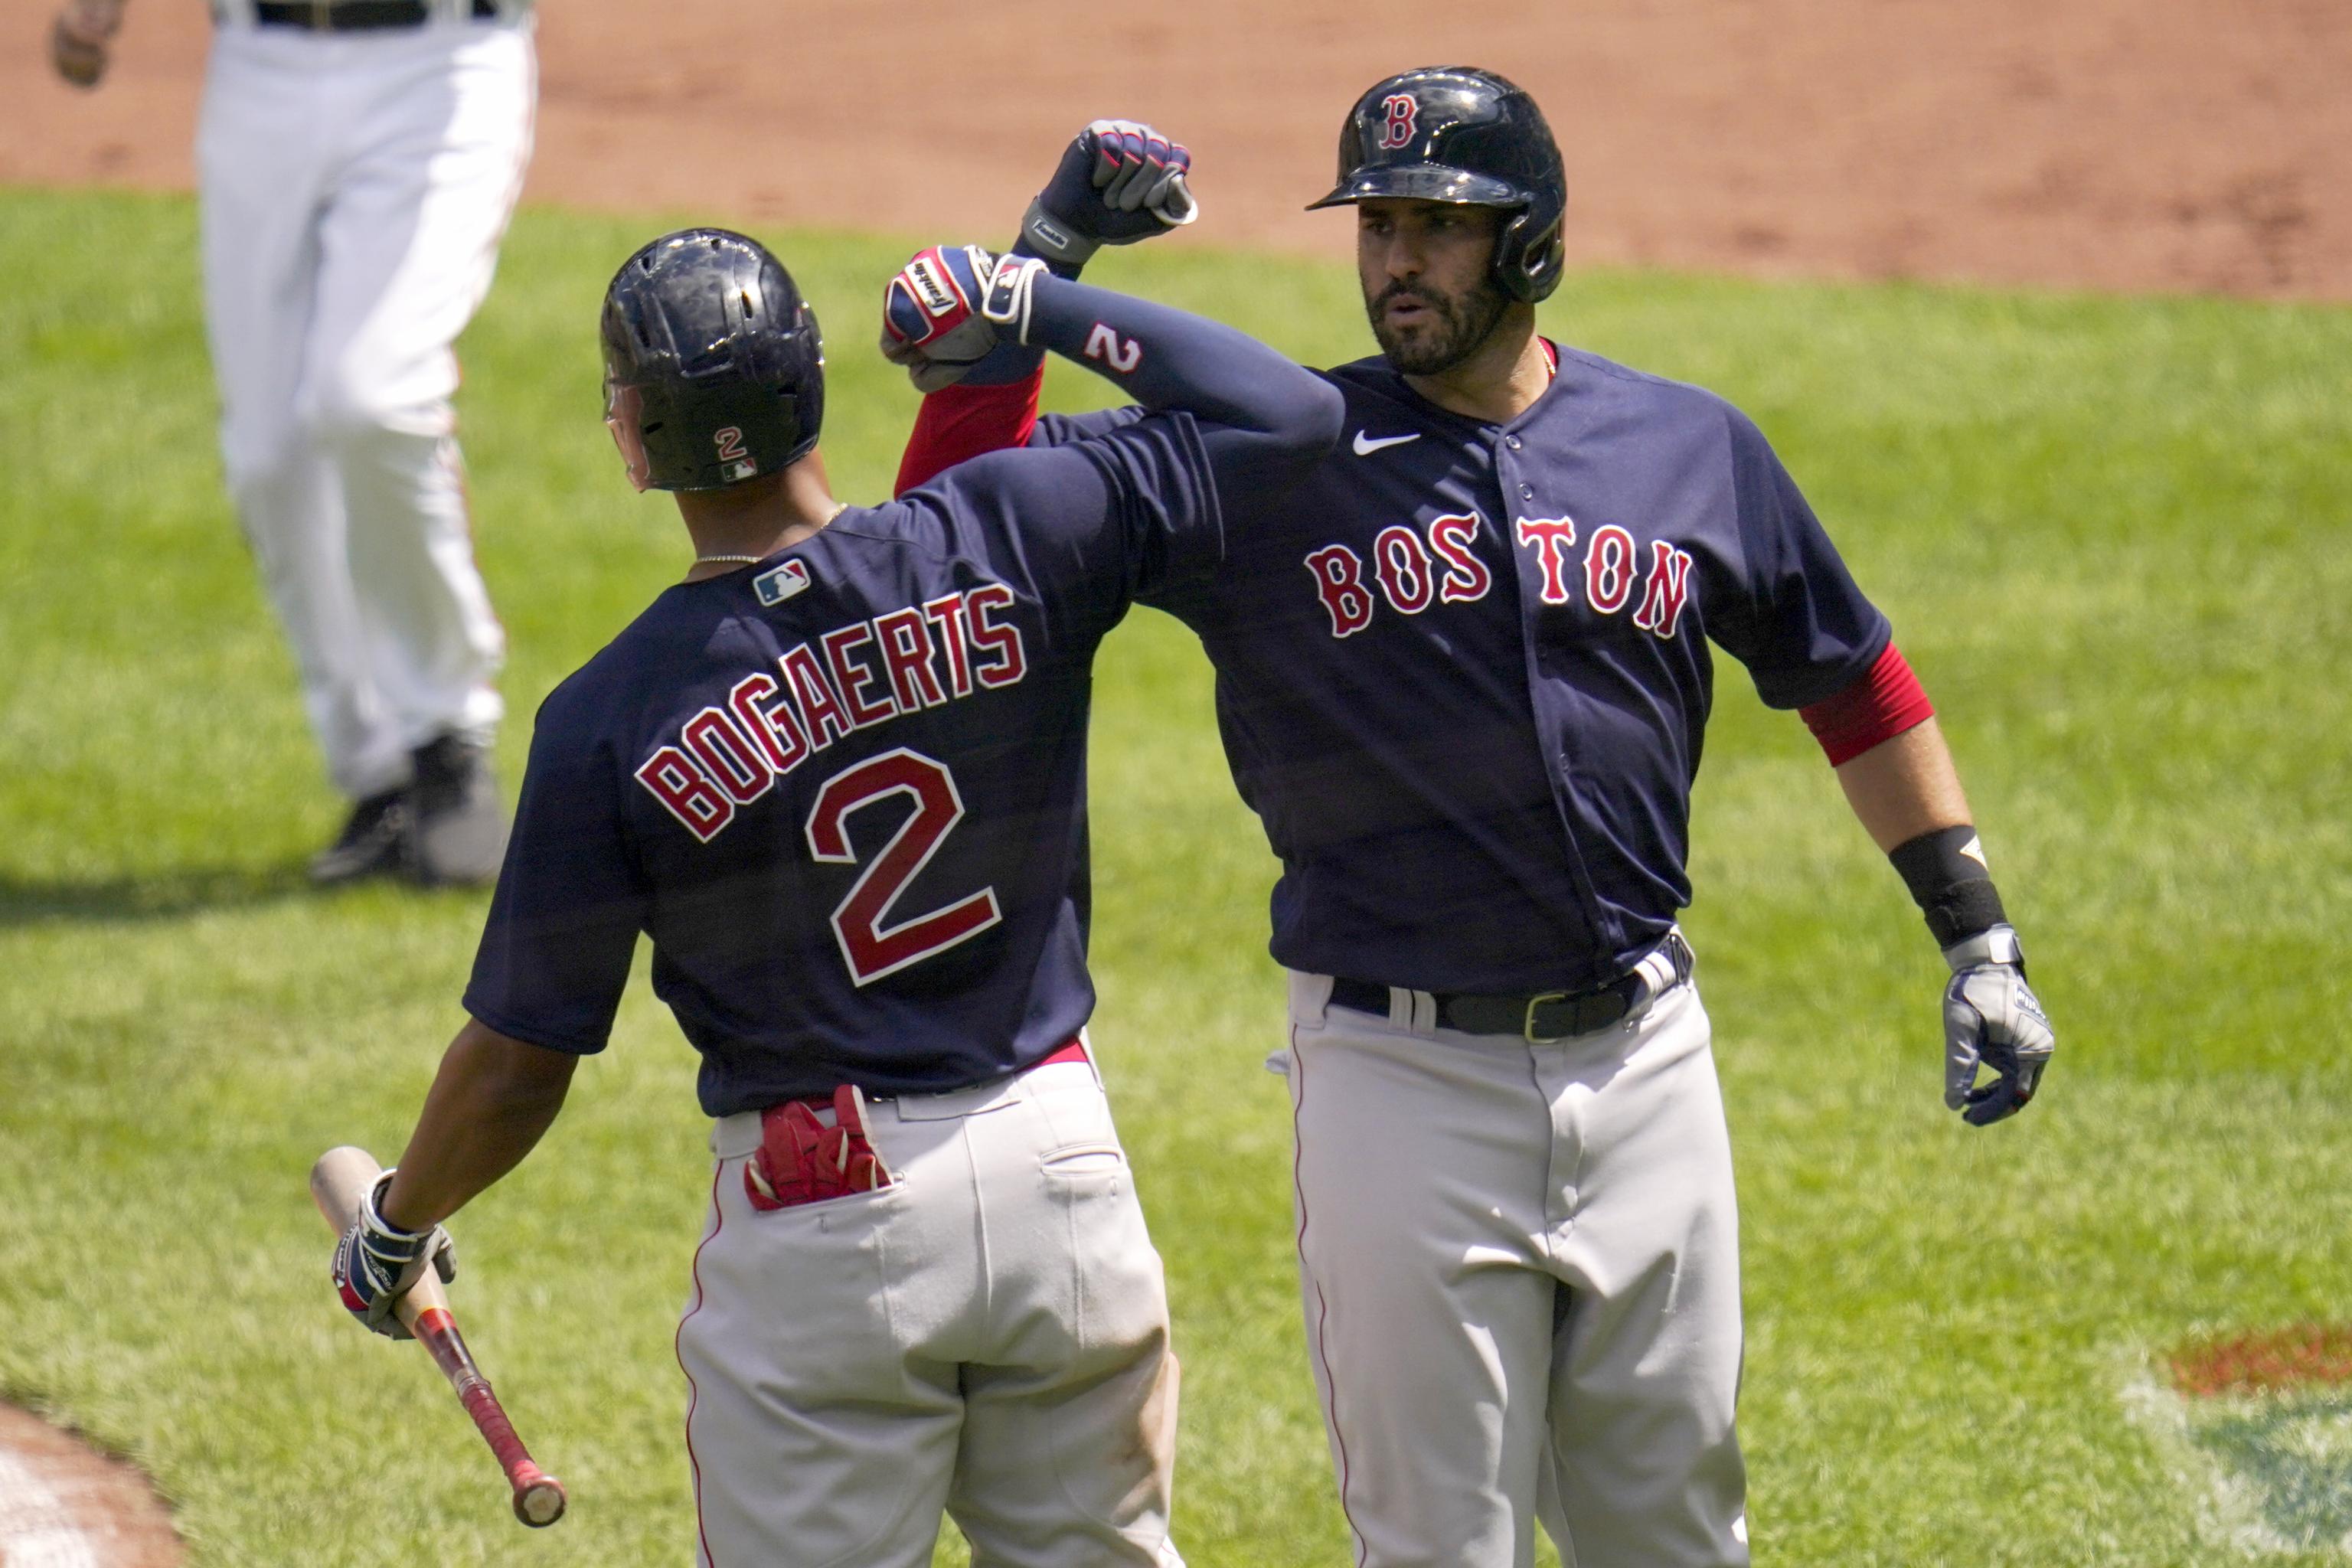 Verdugo drives in four runs as Red Sox beat Twins 9-3